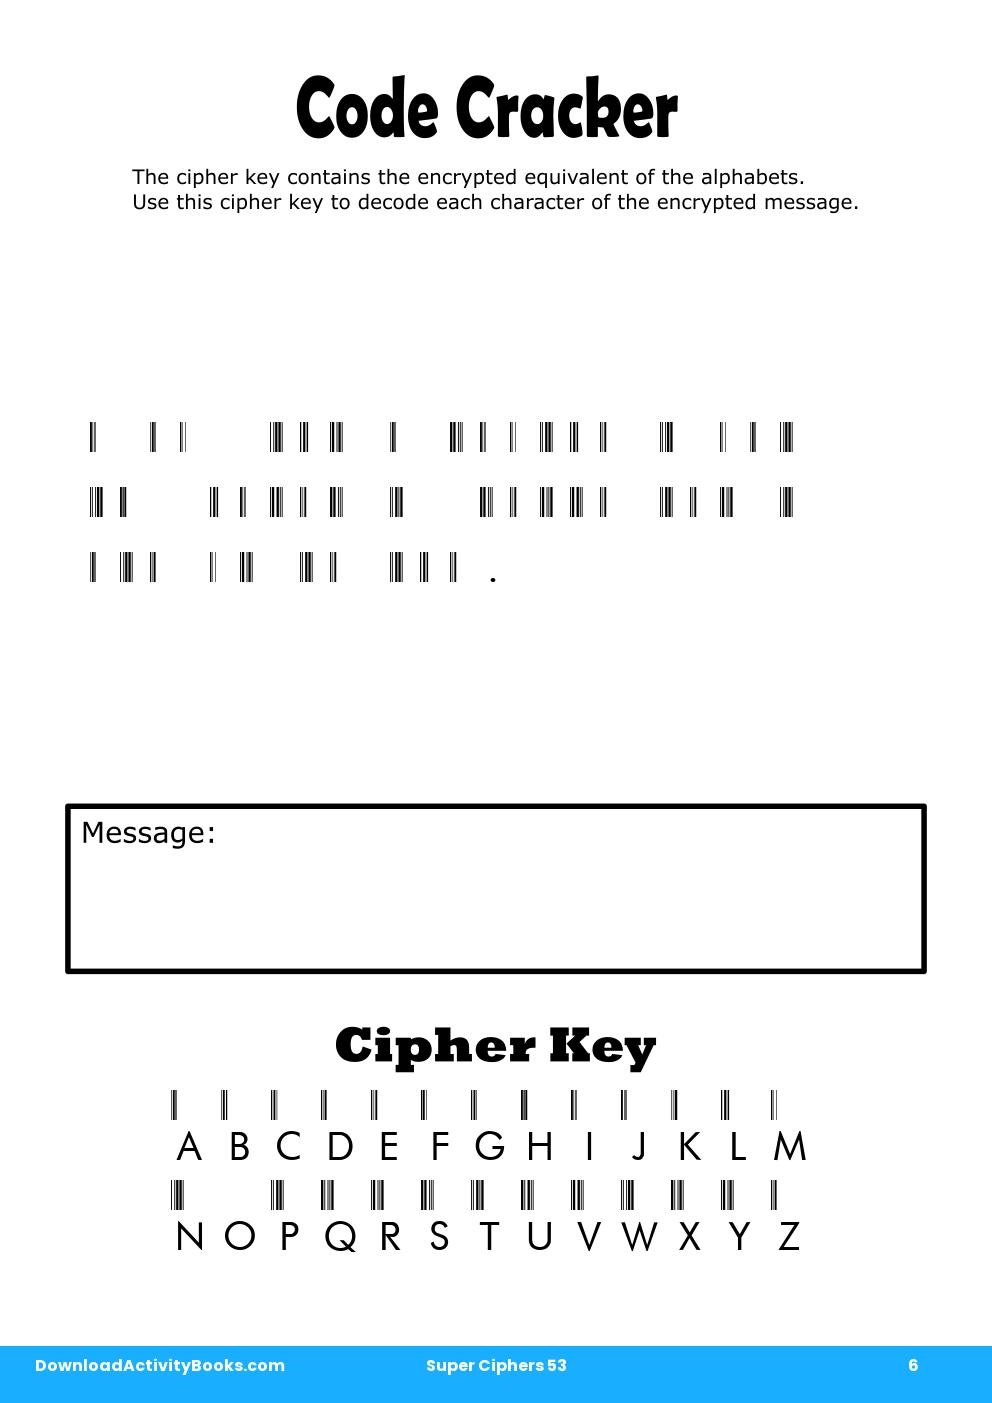 Code Cracker in Super Ciphers 53